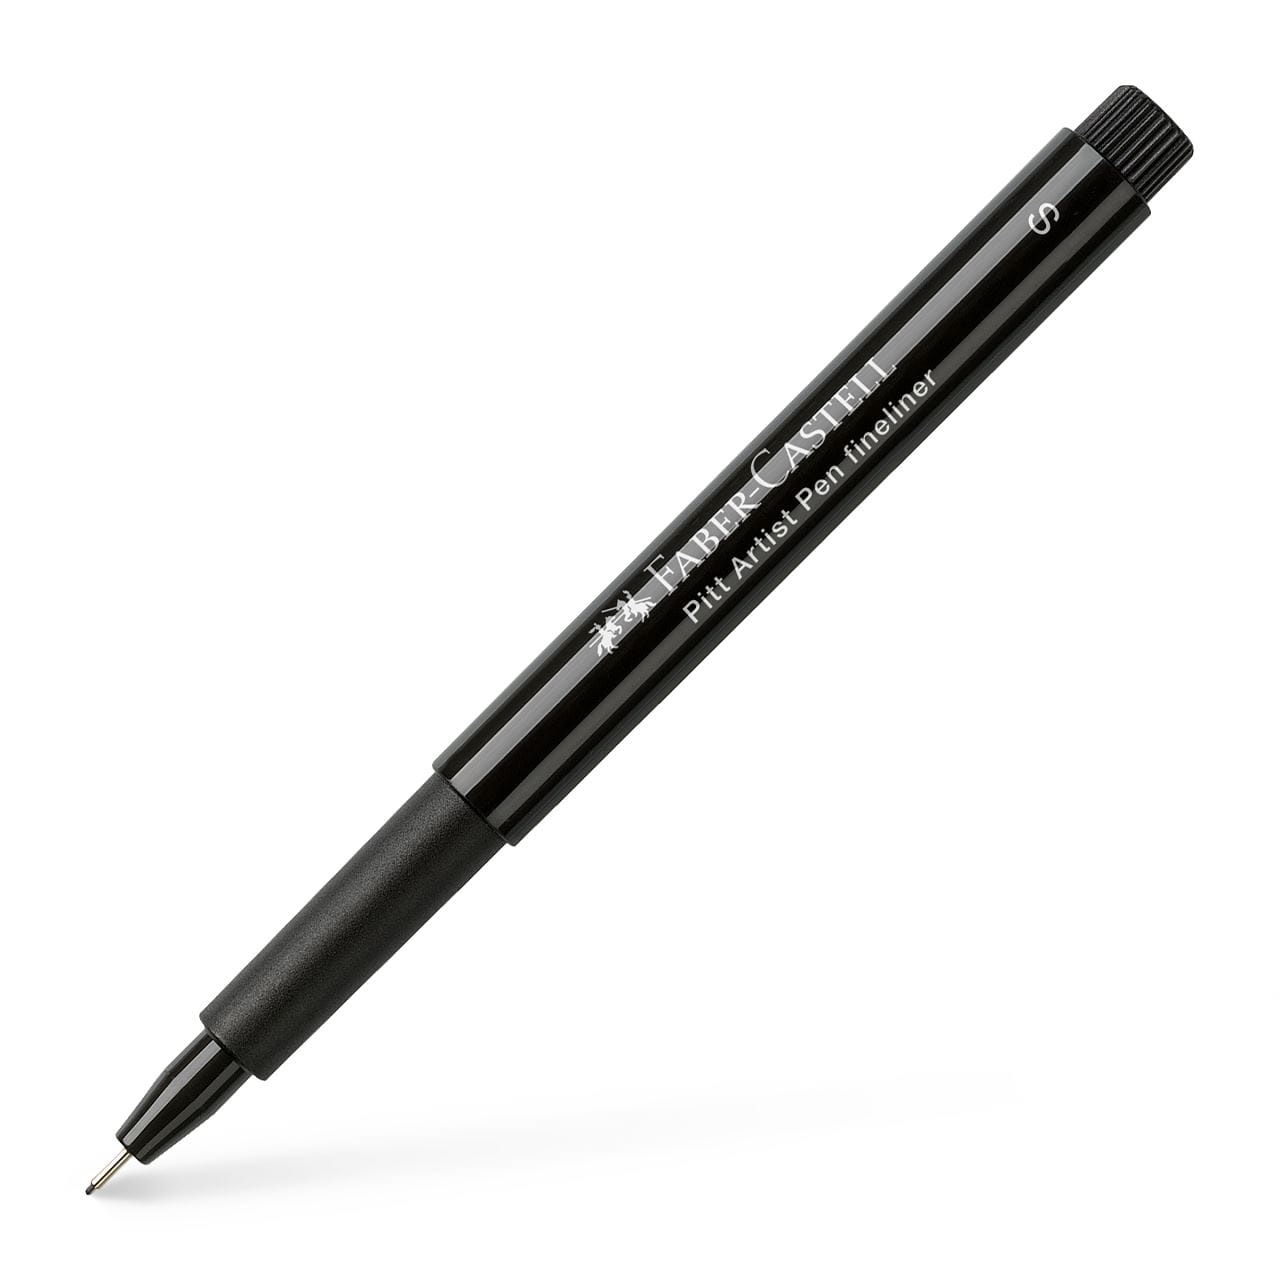 Faber-Castell - Pitt Artist Pen Fineliner S India ink pen, black